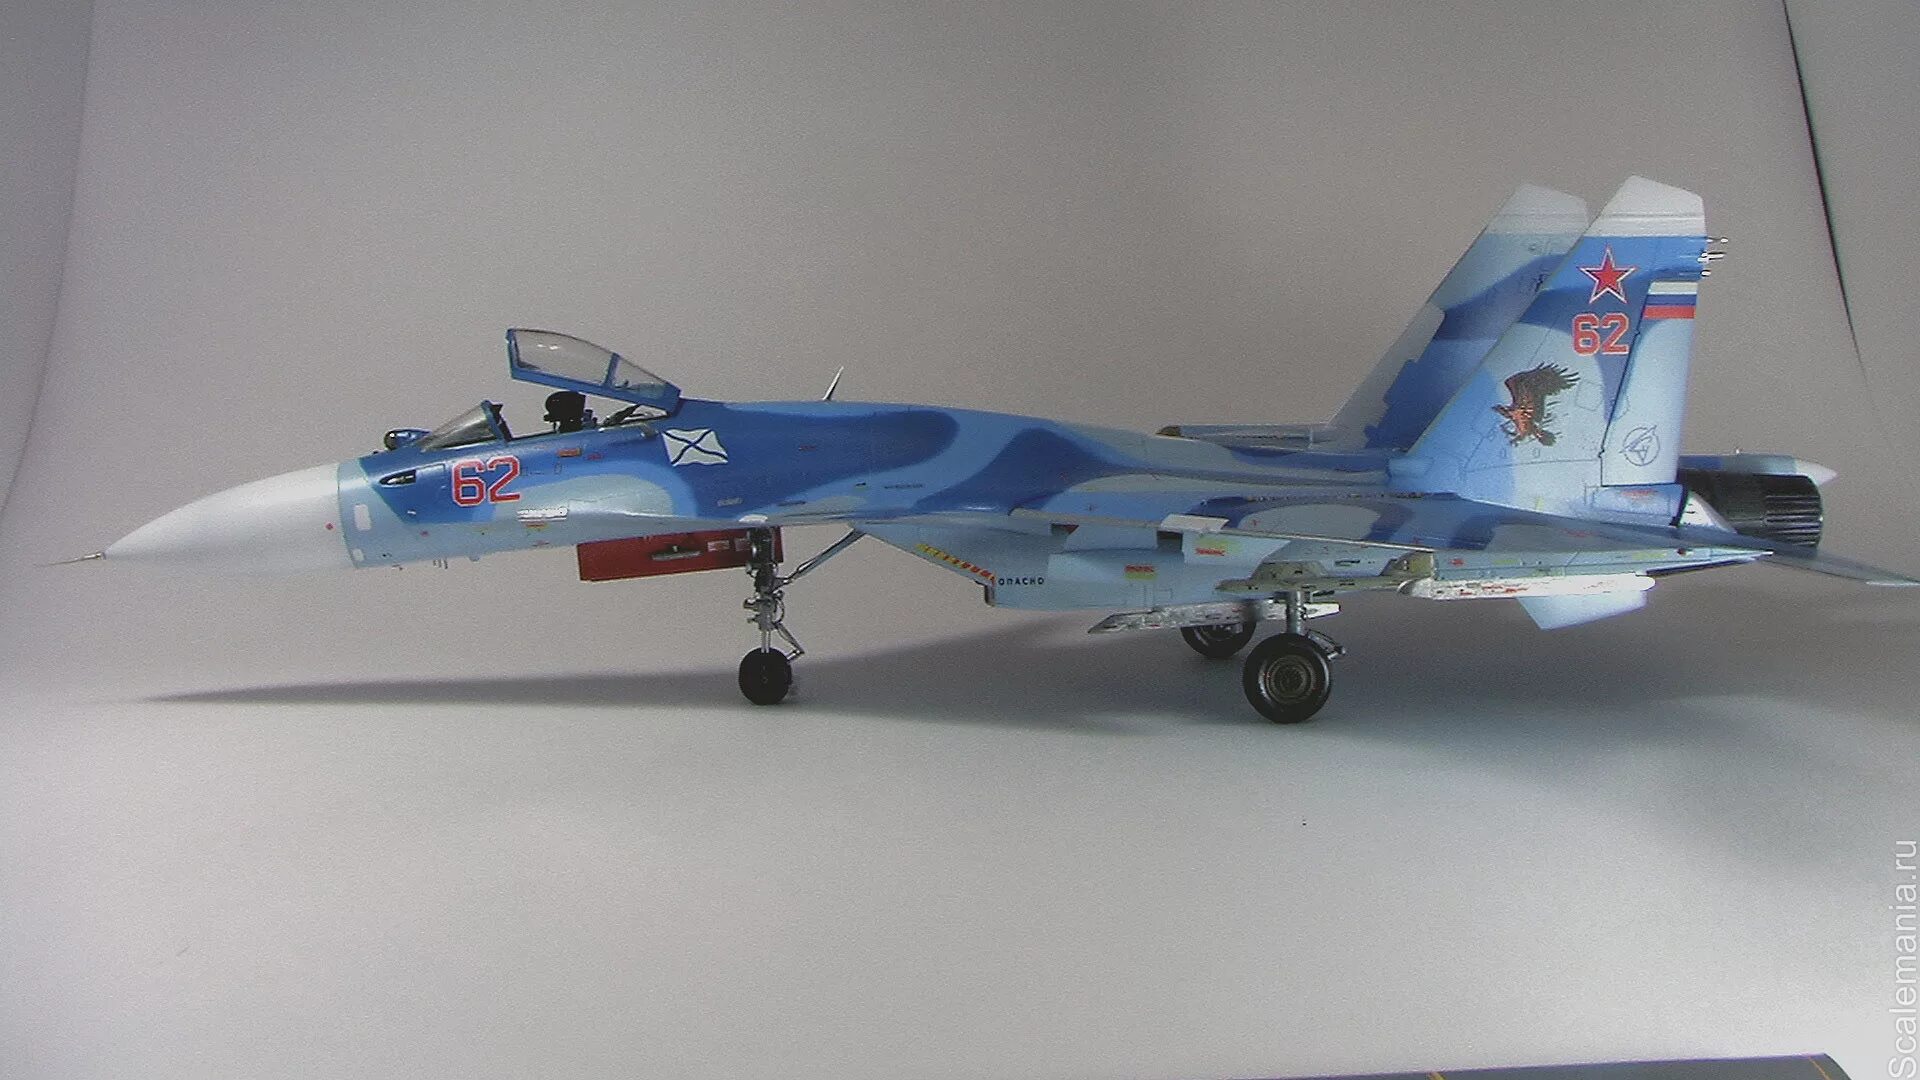 1 33 48. Су-27уб 1/48 Academy. Модель самолета Су-27, 1/48 Academy. Обтекатель Су-27 1:48 Academy. Ла 7 1 48 Академия.